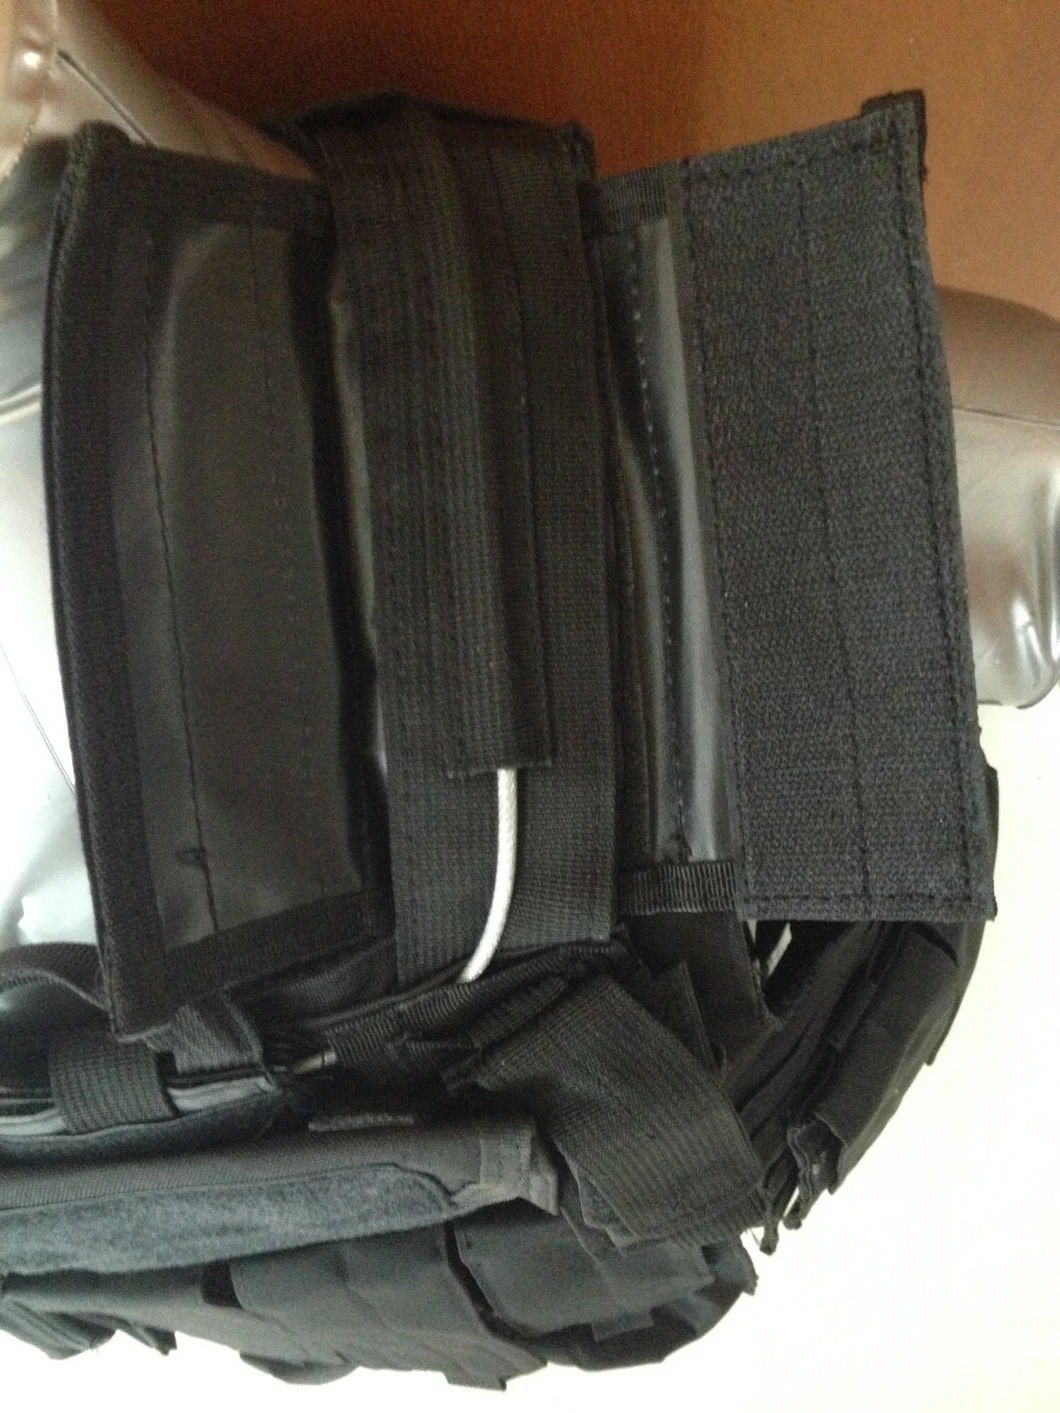 Military Bulletproof Vest Tactical Bullet Proof Body Armor